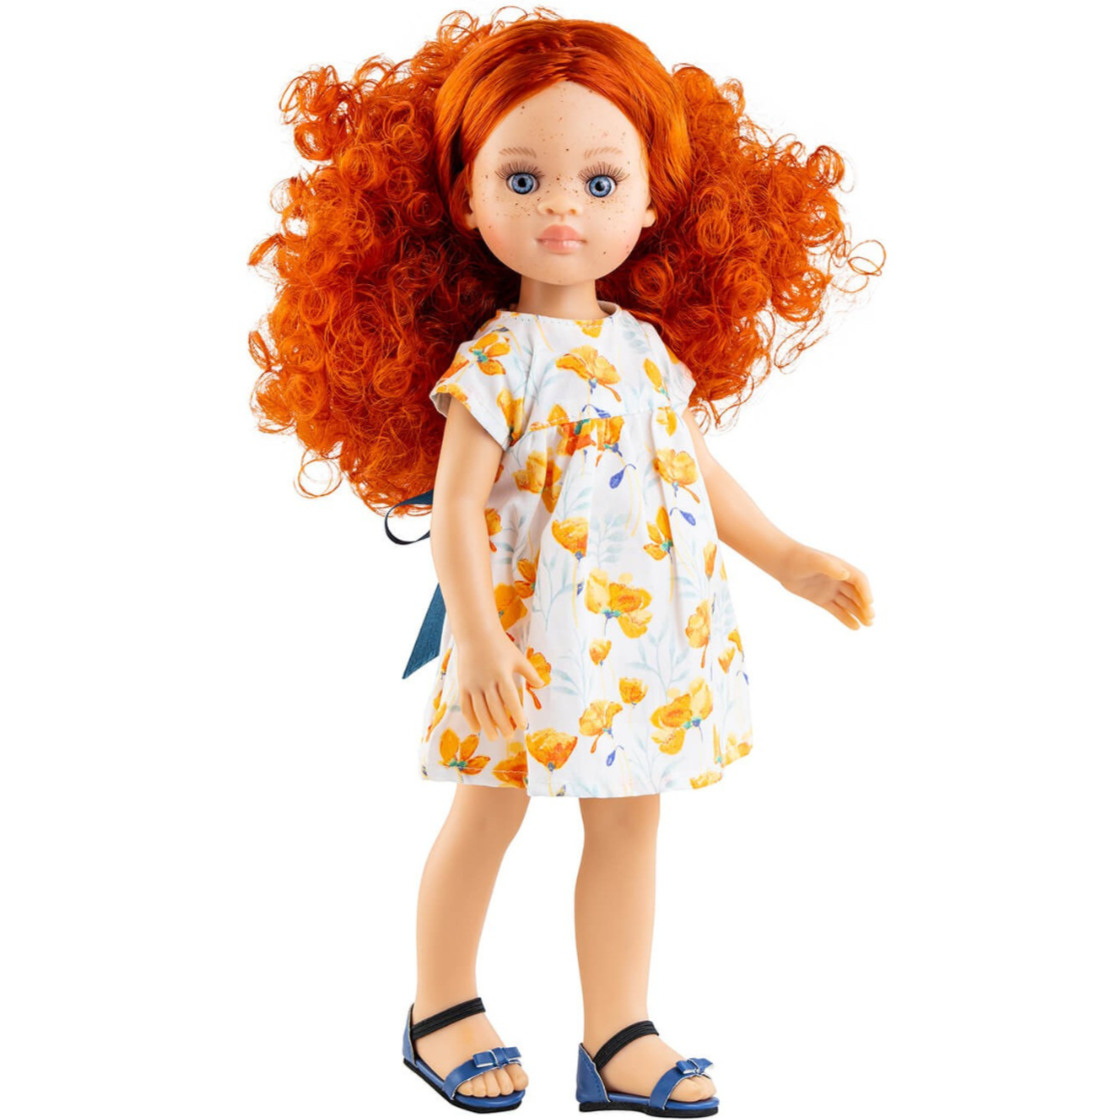 Paola Reina: Spanish doll red hair Las Amigas Virgin 32 cm